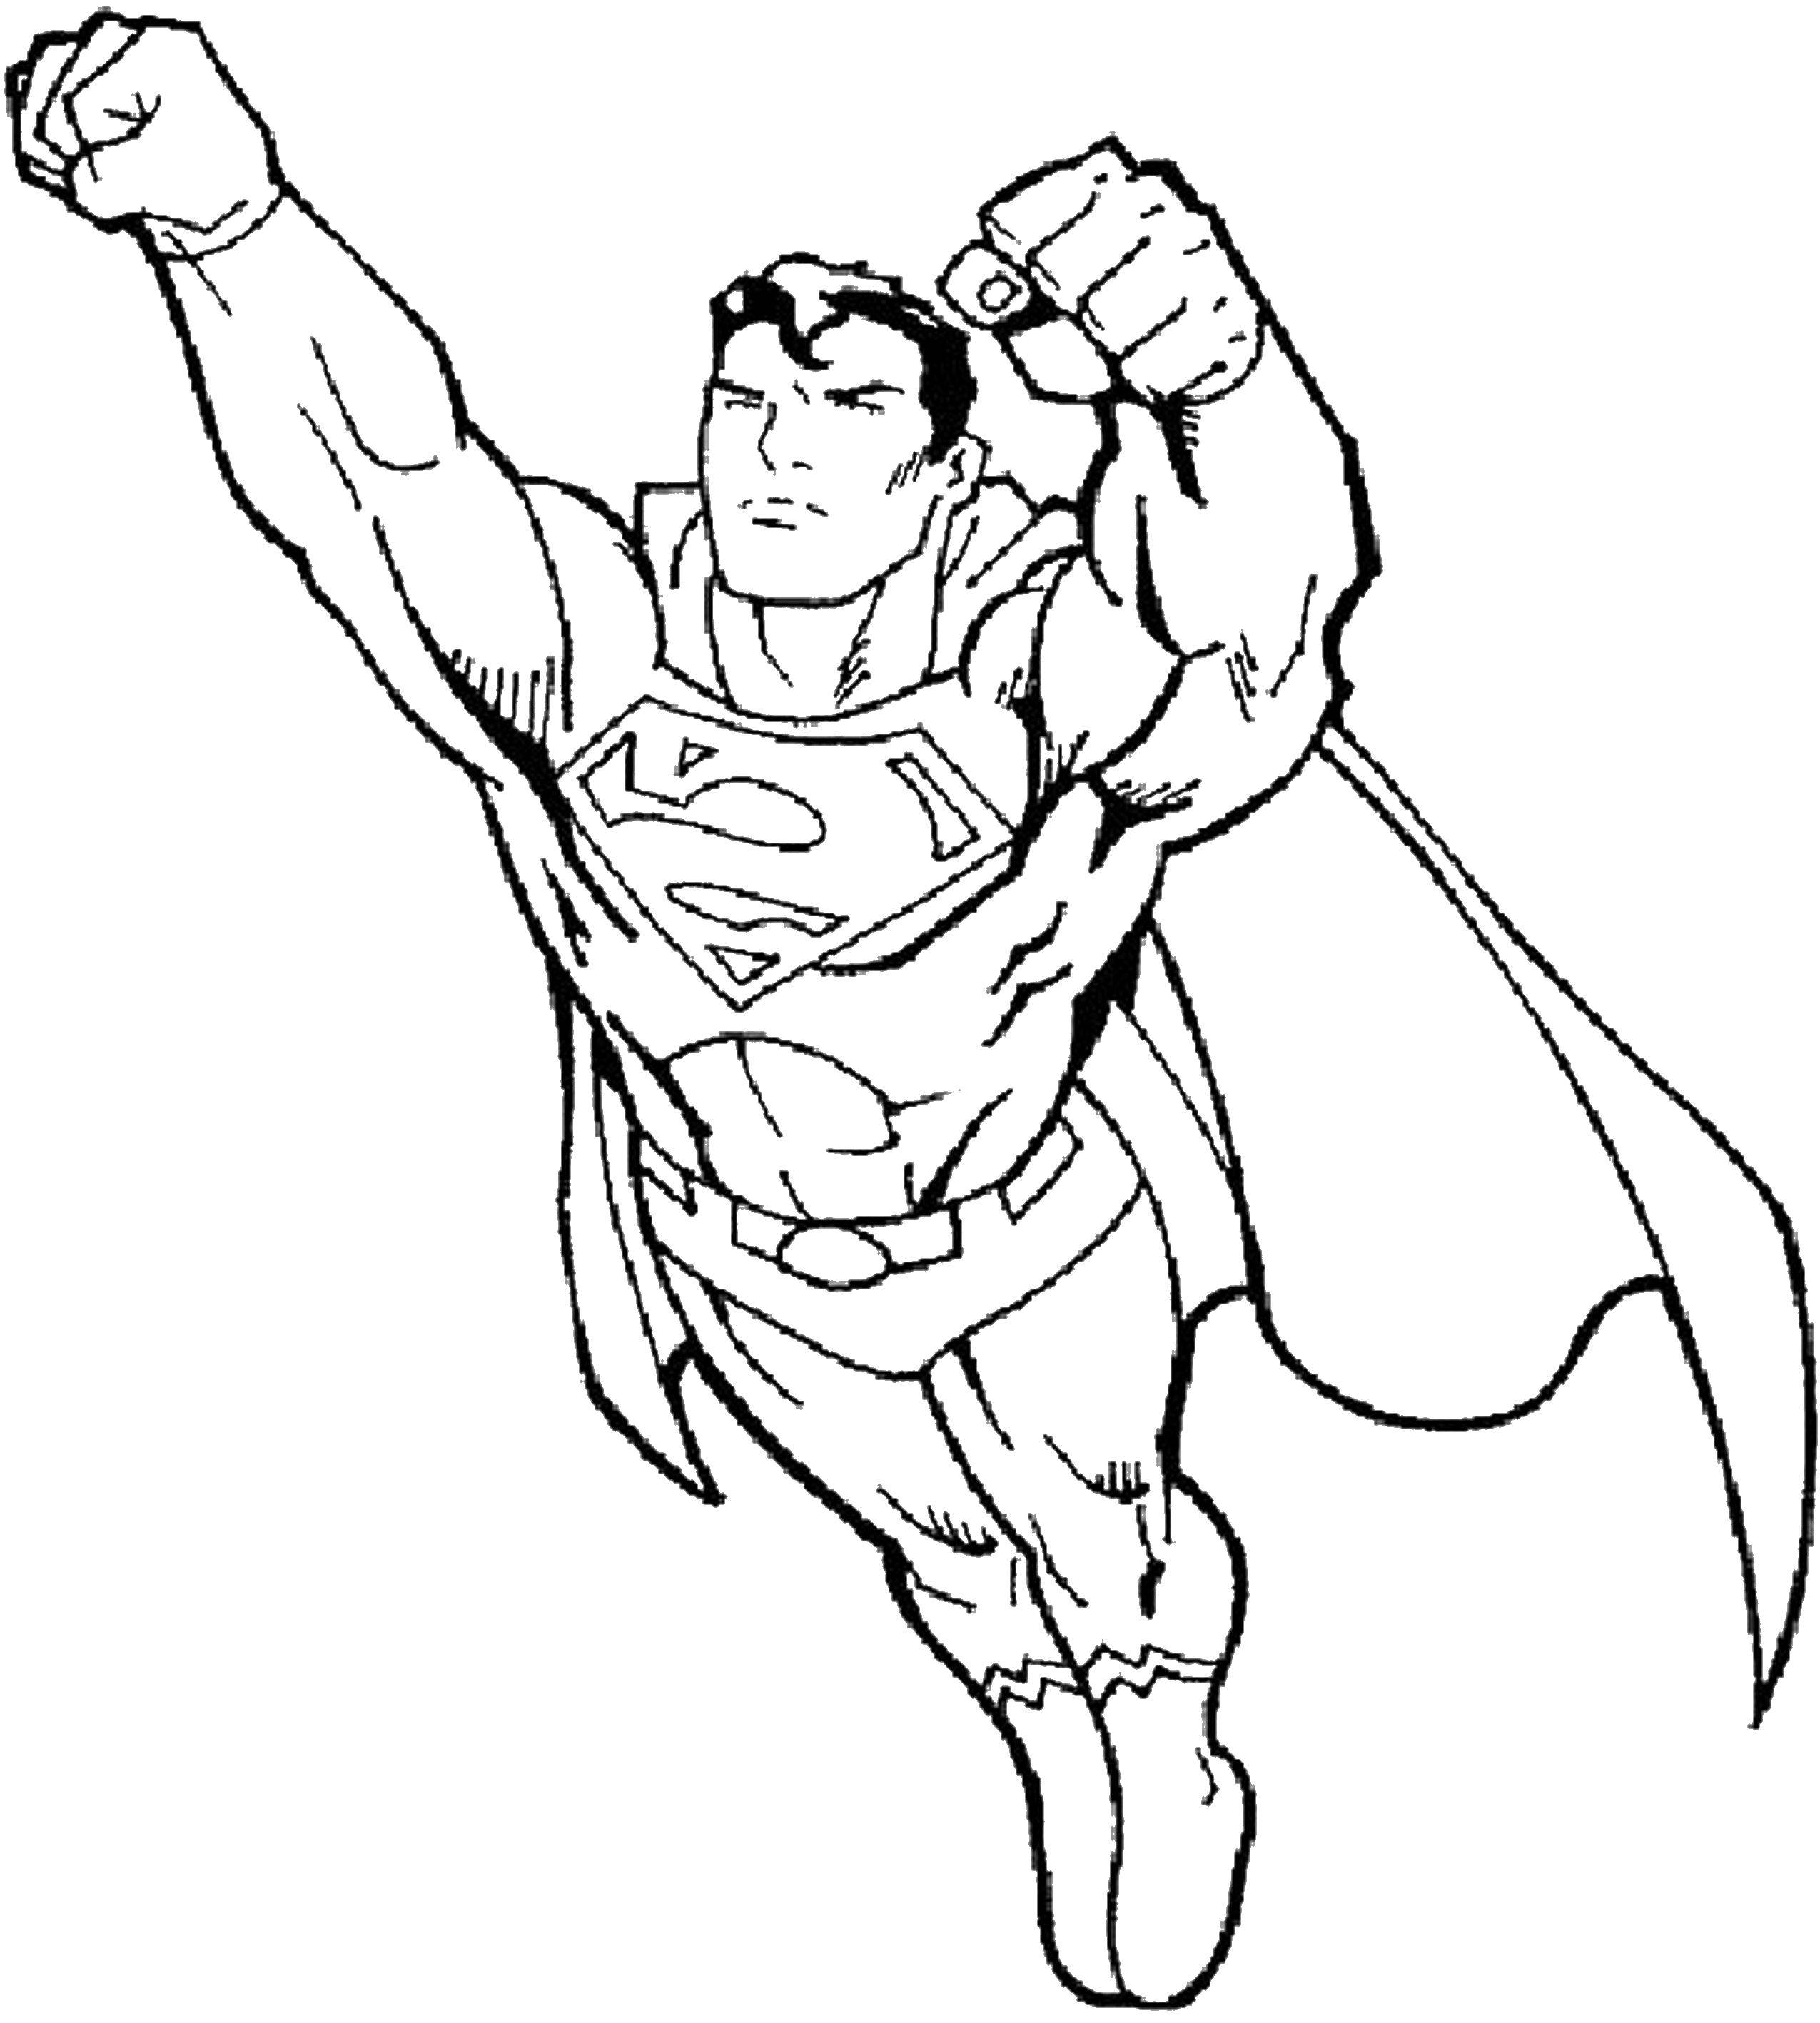 Coloring Superman in flight. Category superheroes. Tags:  Superman, superheroes.